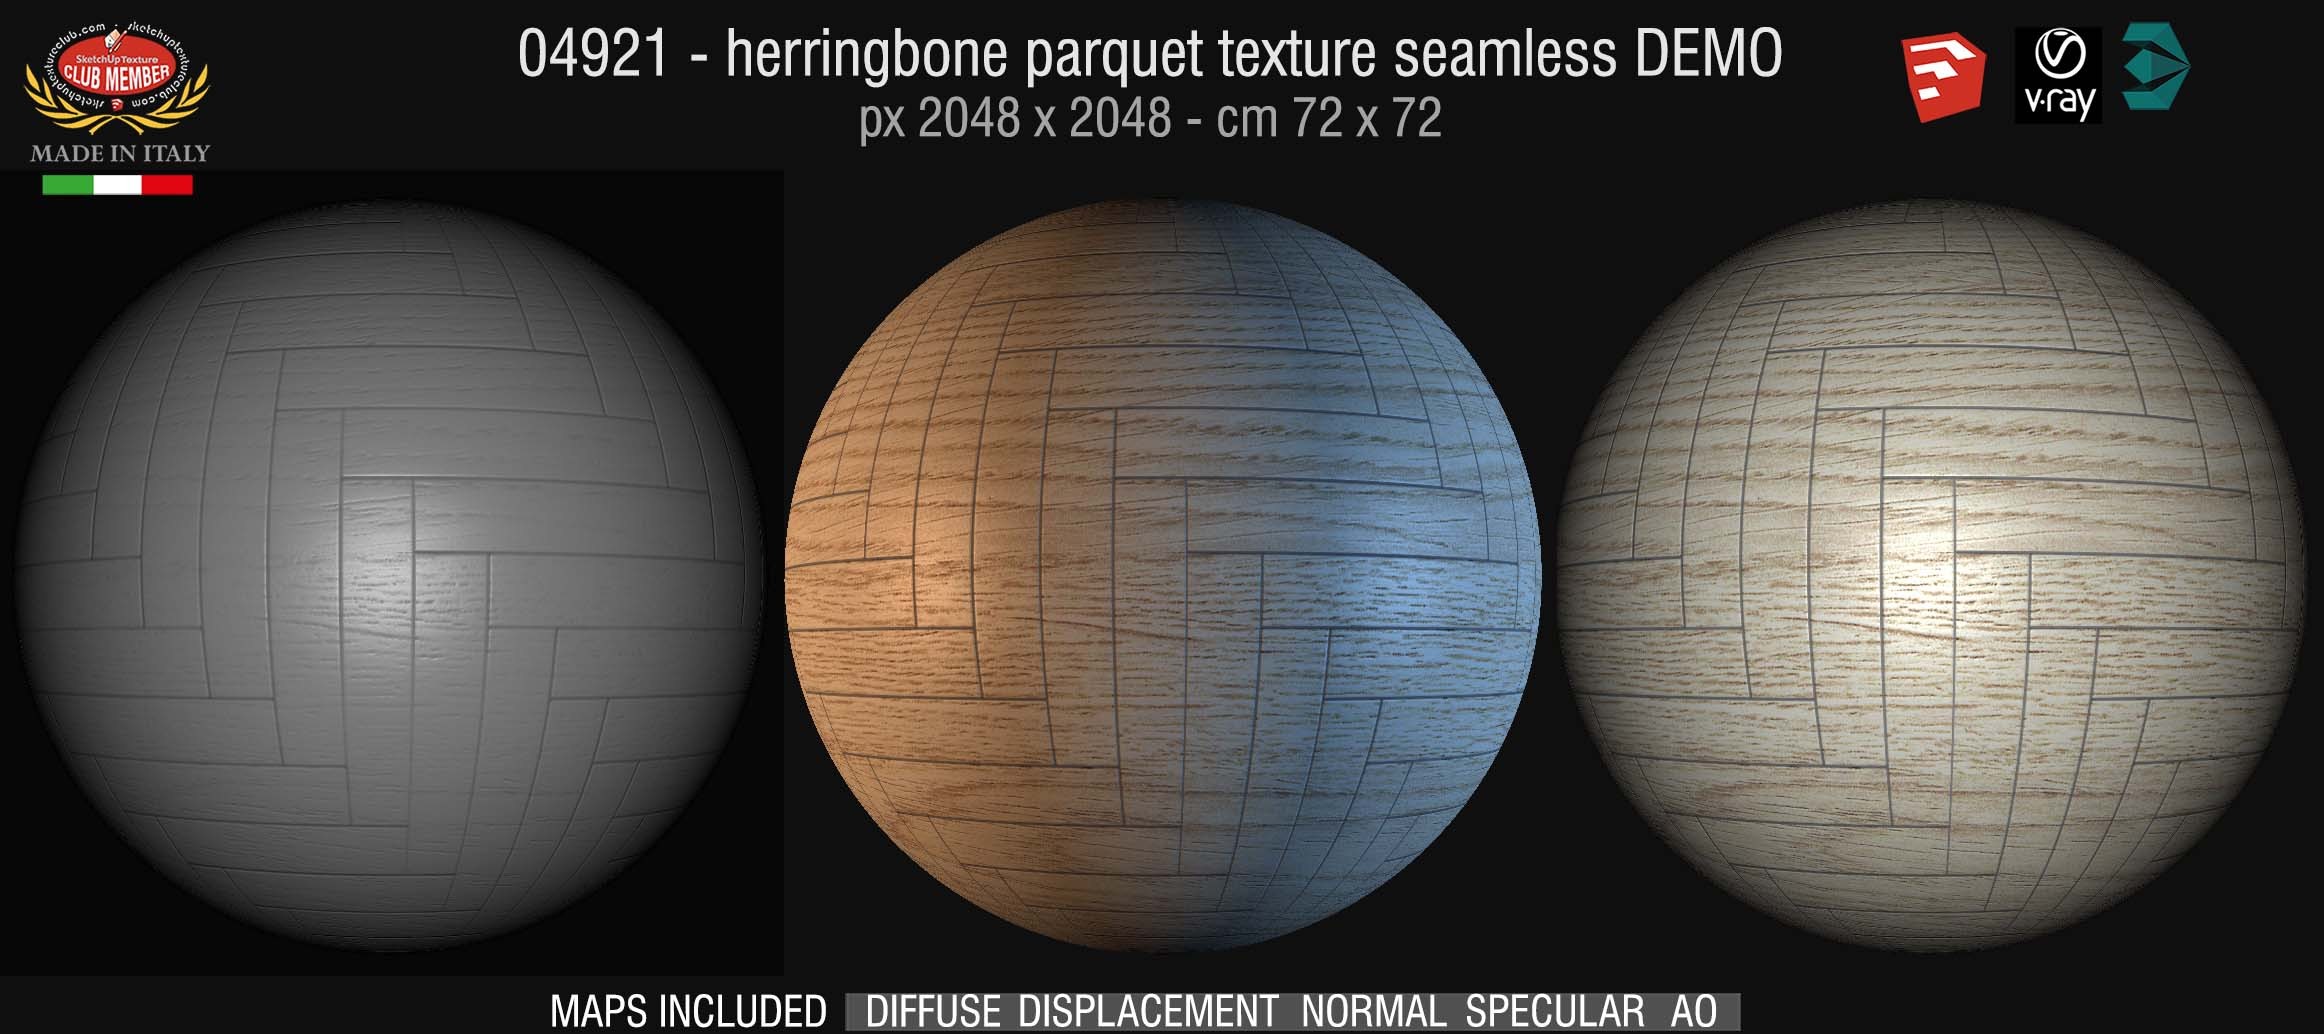 04921 HR Herringbone parquet texture seamless + maps DEMO